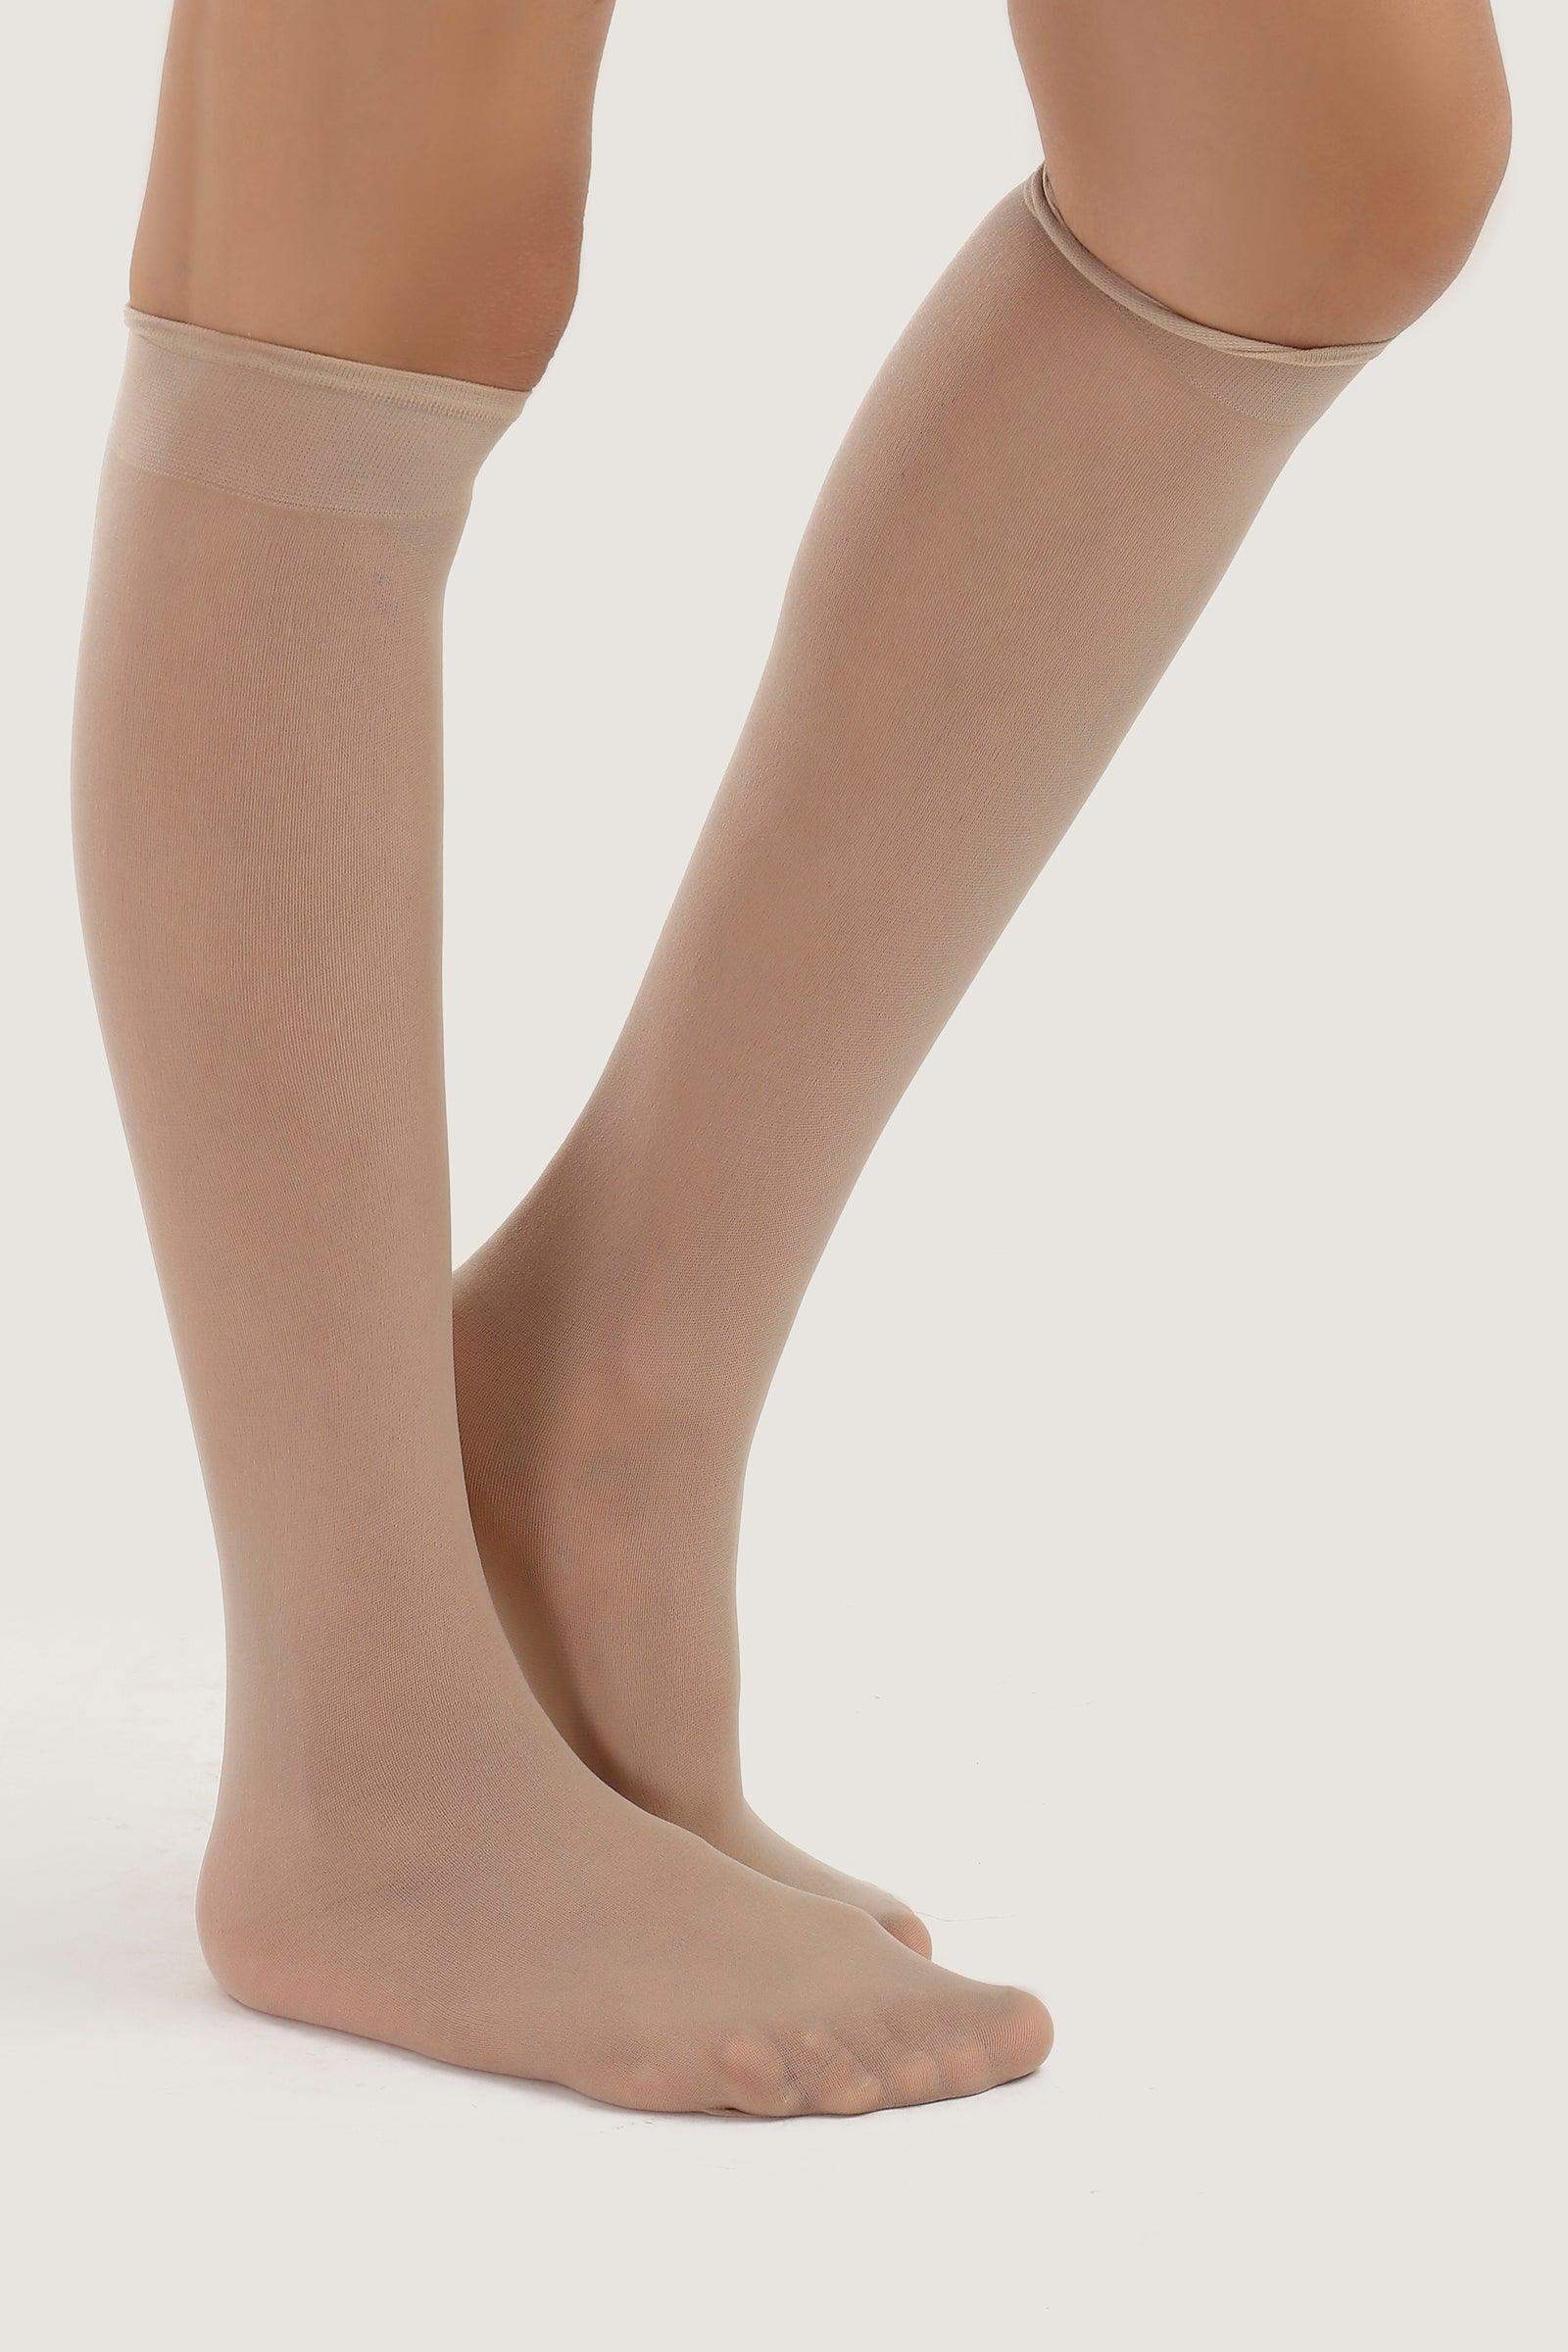 Stretch Knee High Socks - Carina - كارينا